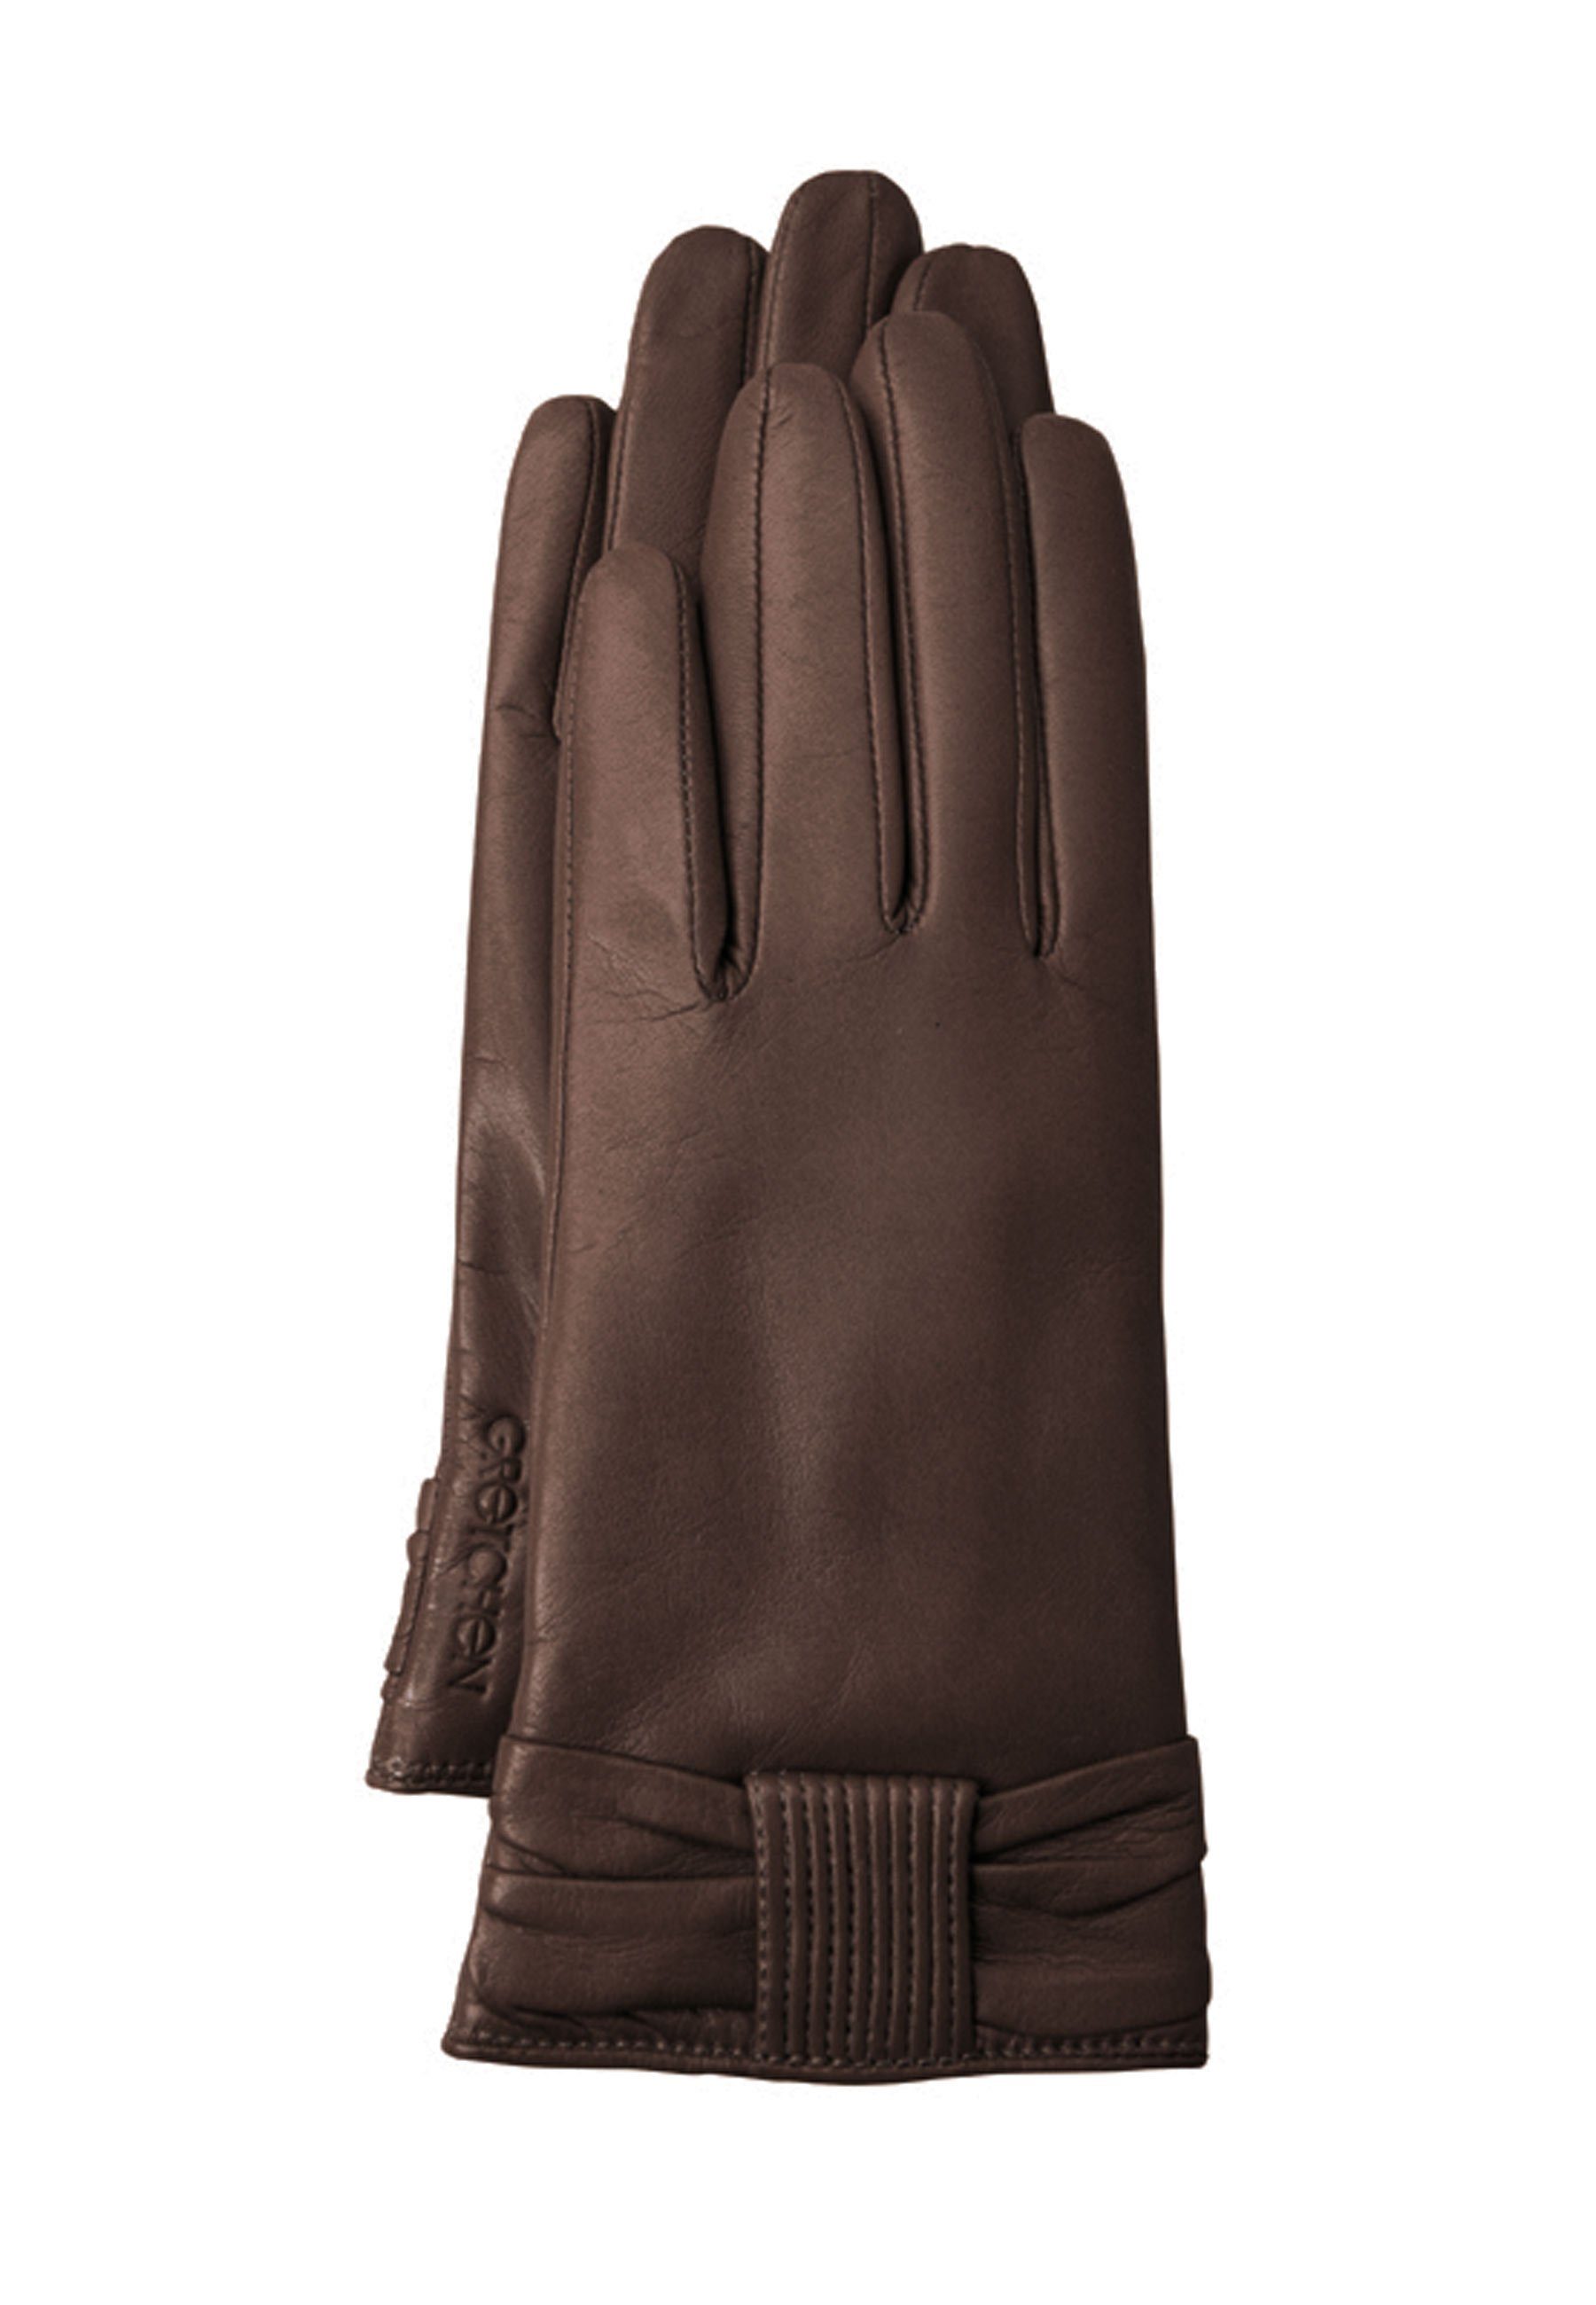 GRETCHEN Lederhandschuhe Bow Gloves mit kuscheligem Kaschmir-Futter braun